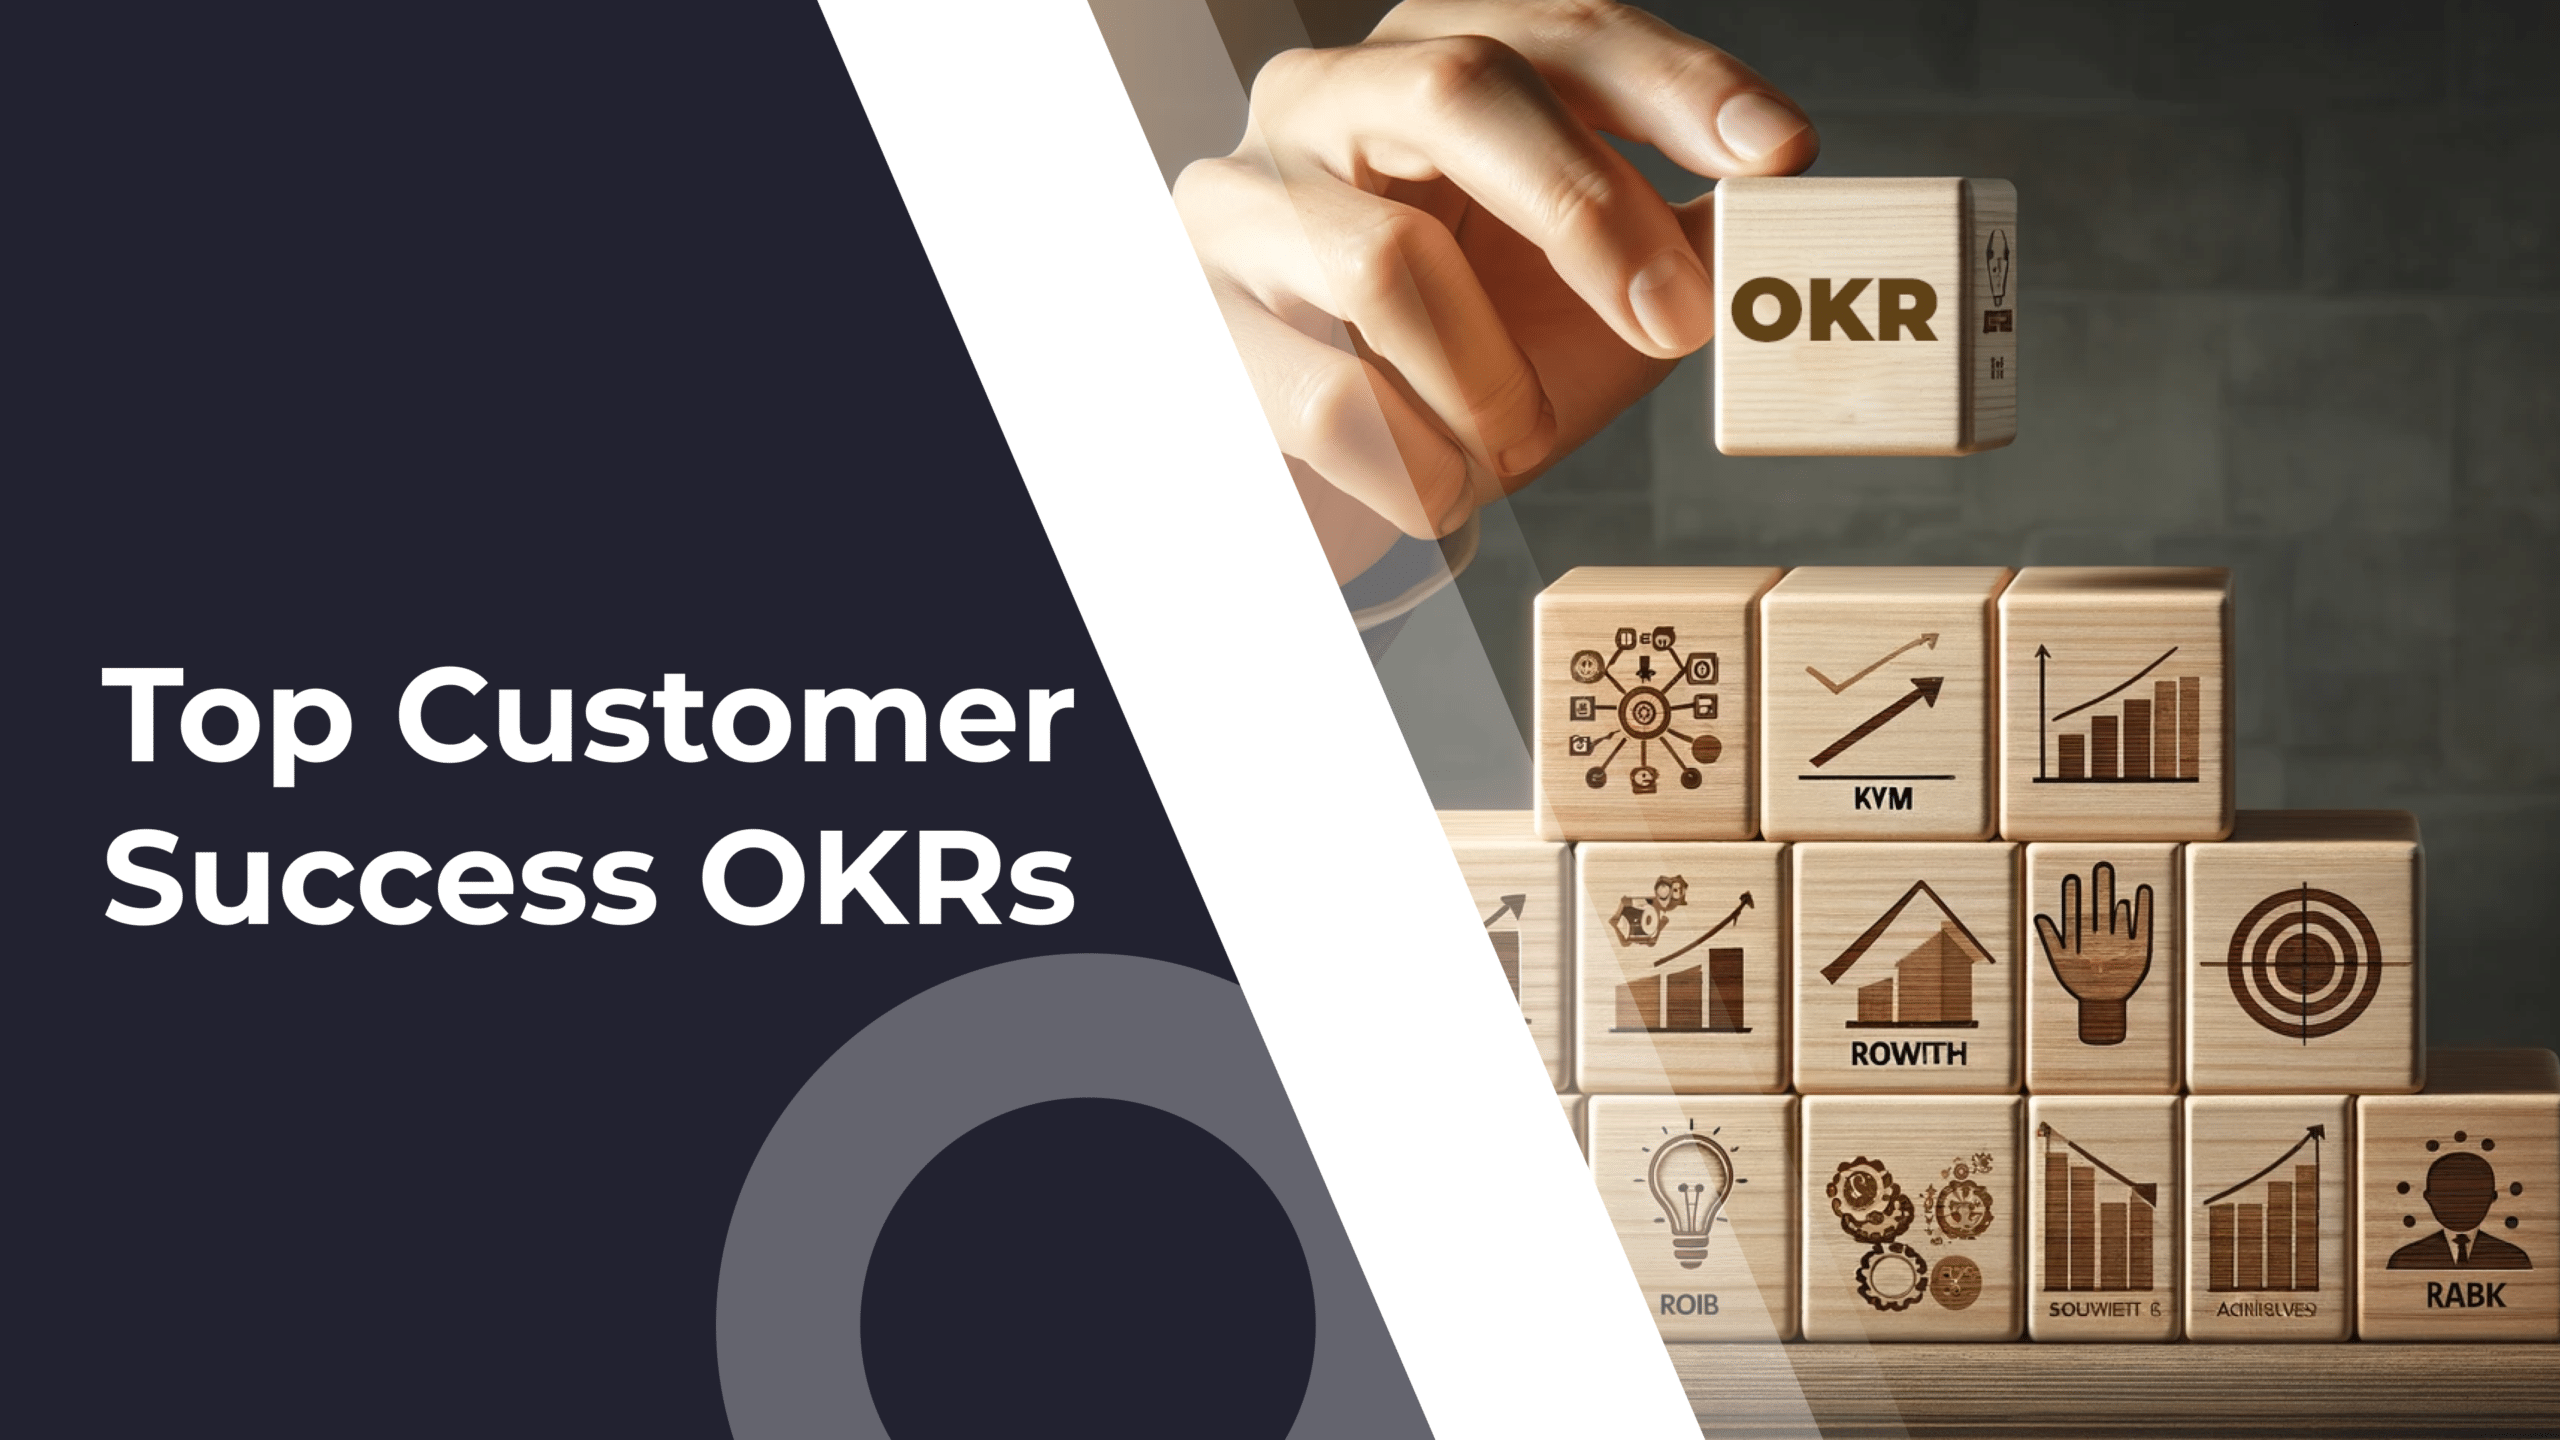 Top Customer Success OKRs to Use + OKR Spreadsheet Template